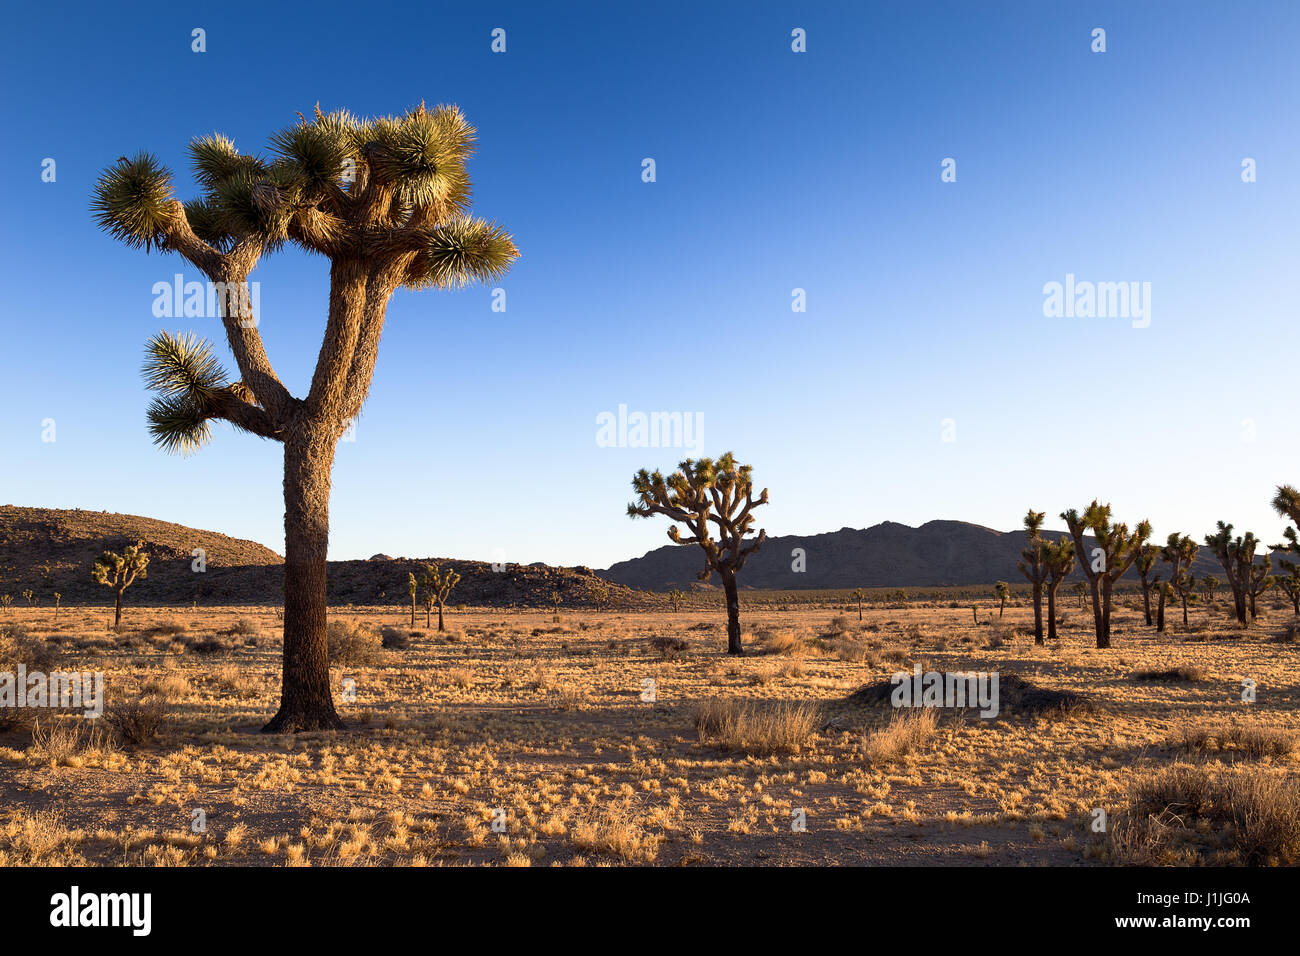 Joshua Tree National Park, California scenic desert landscape Stock Photo